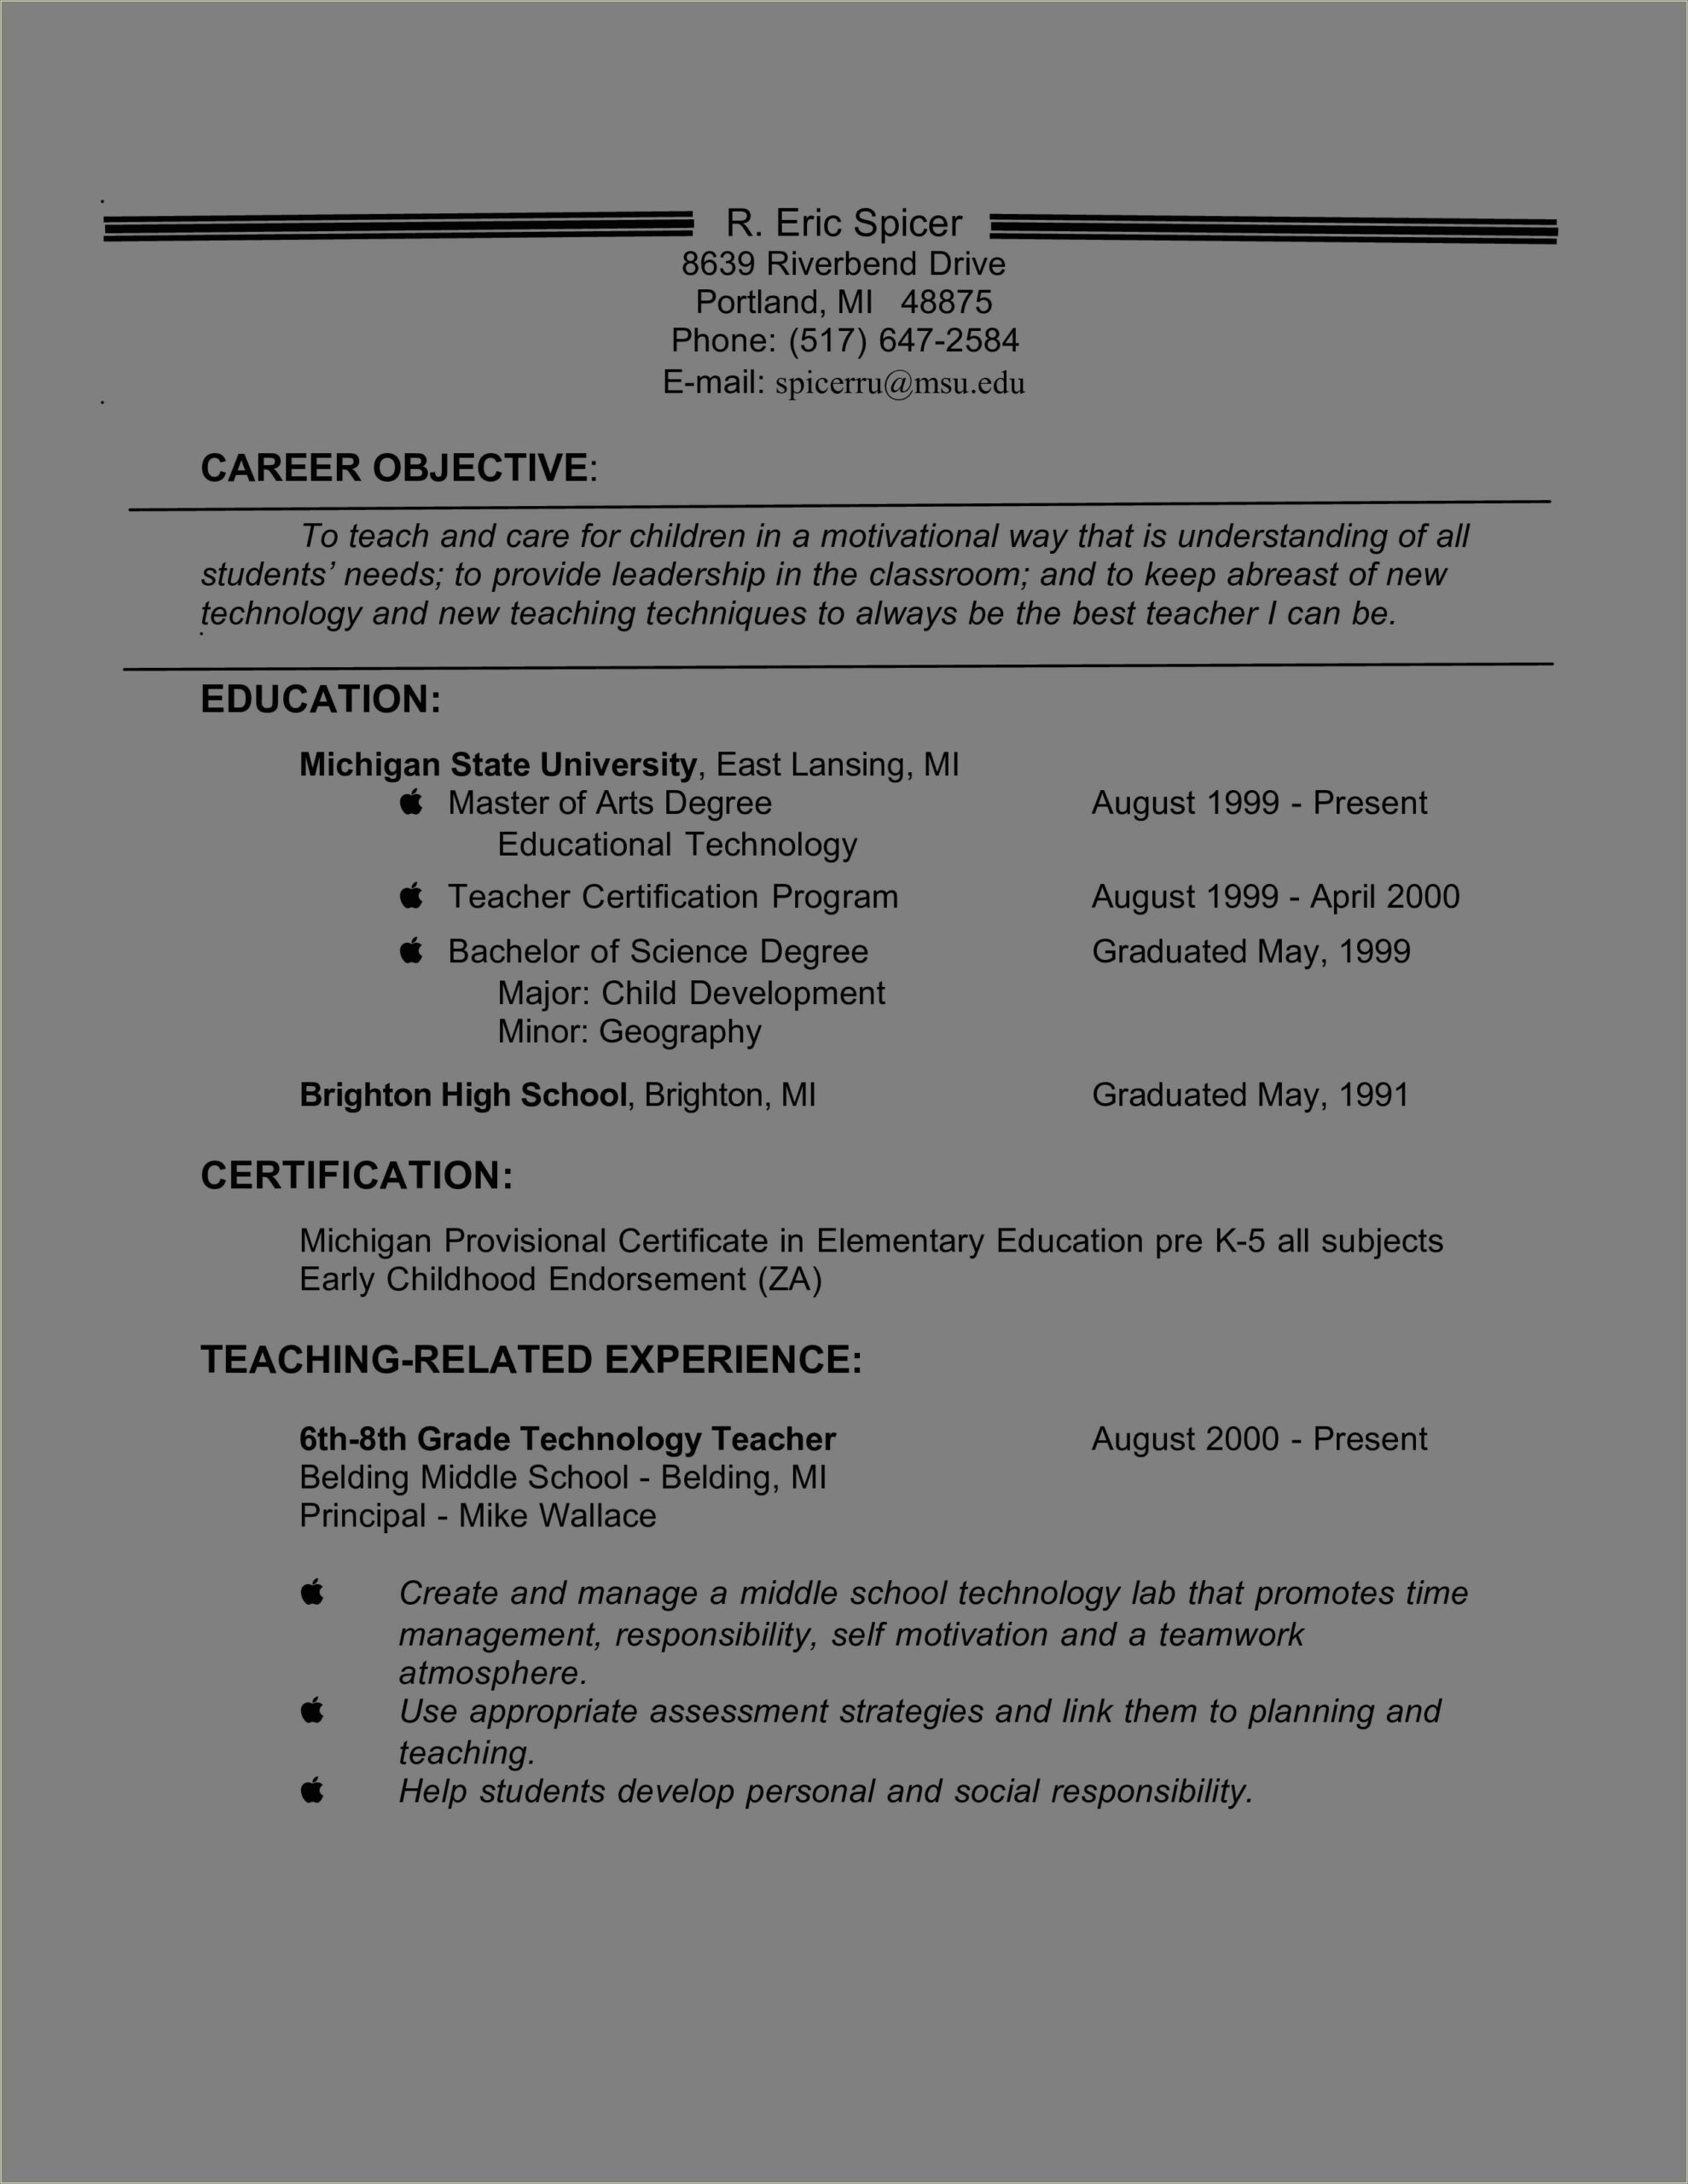 Sample Resume Objective For School Principal